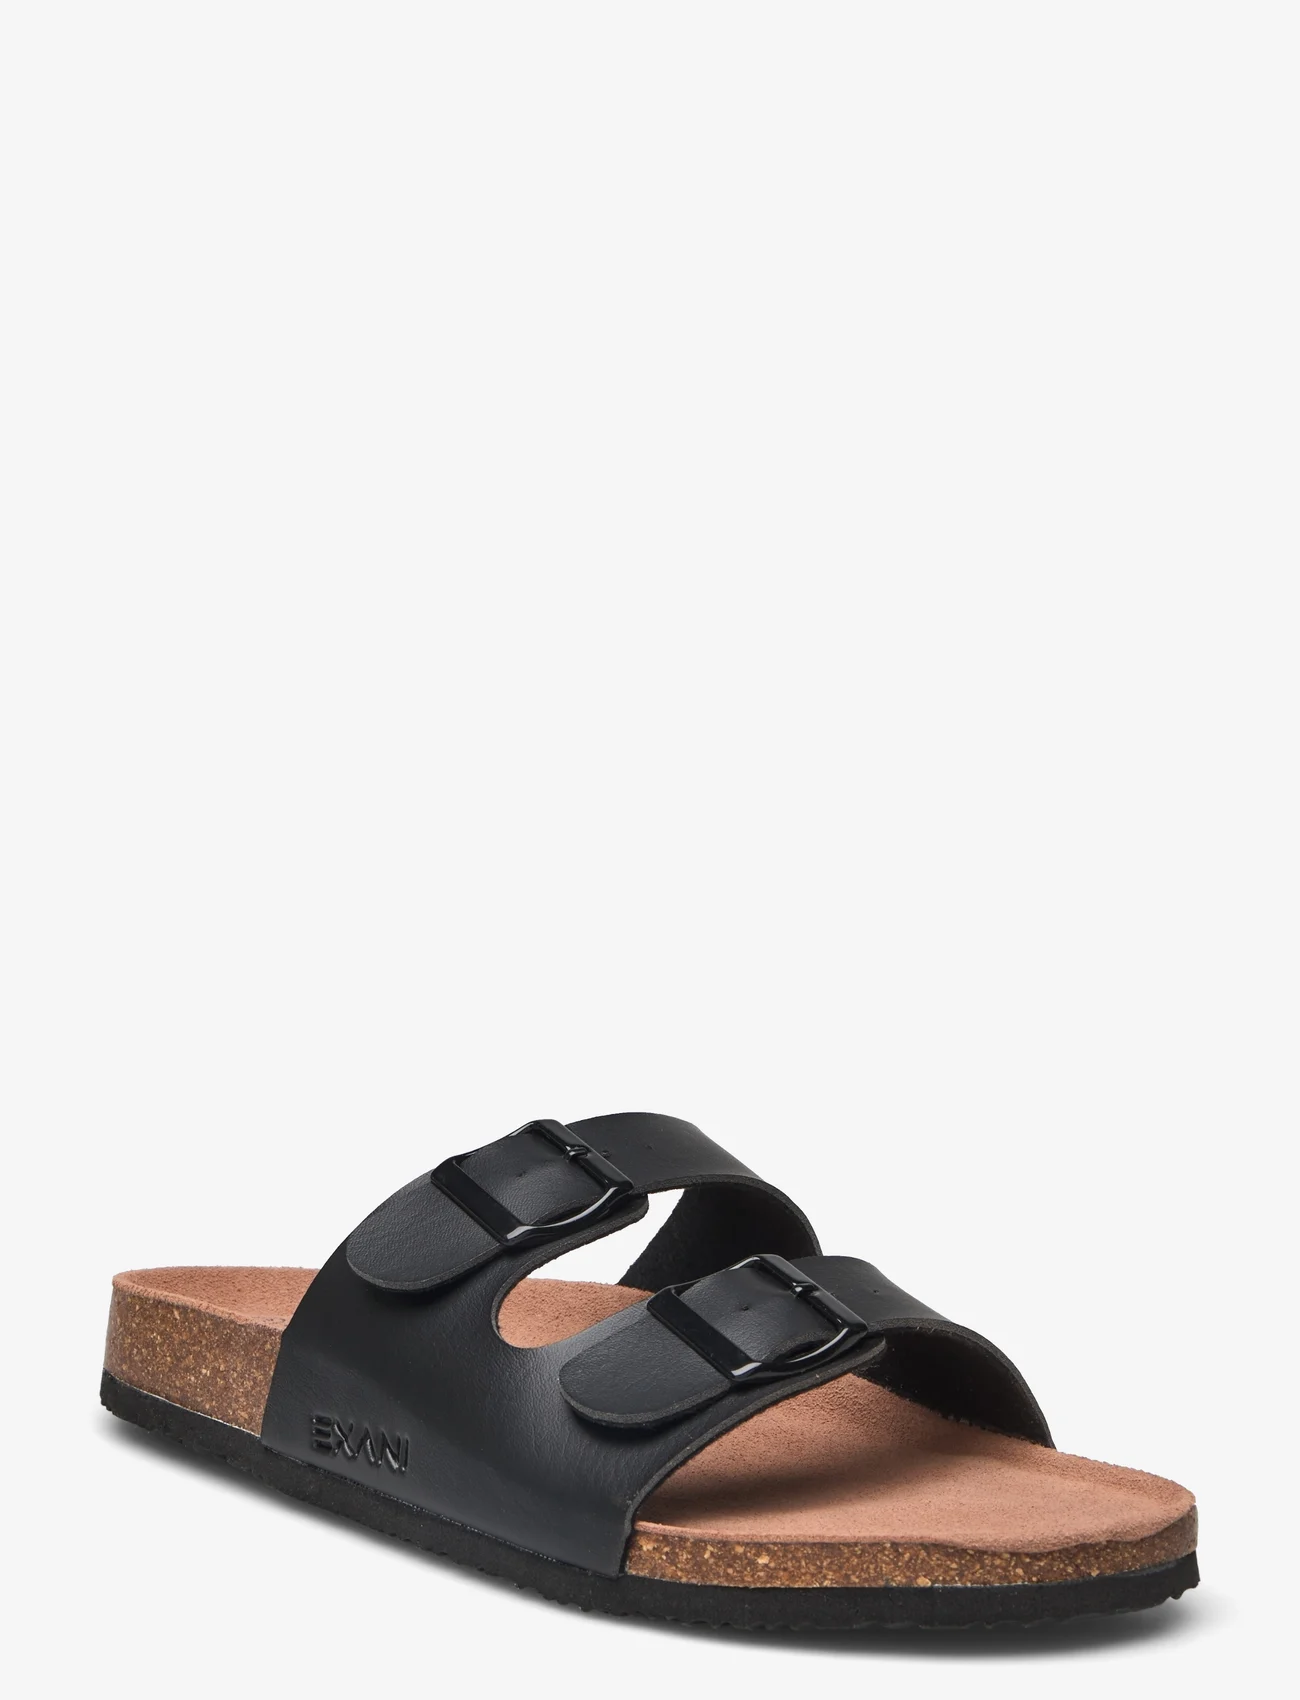 Exani - SPECTRA M - sandals - black - 0